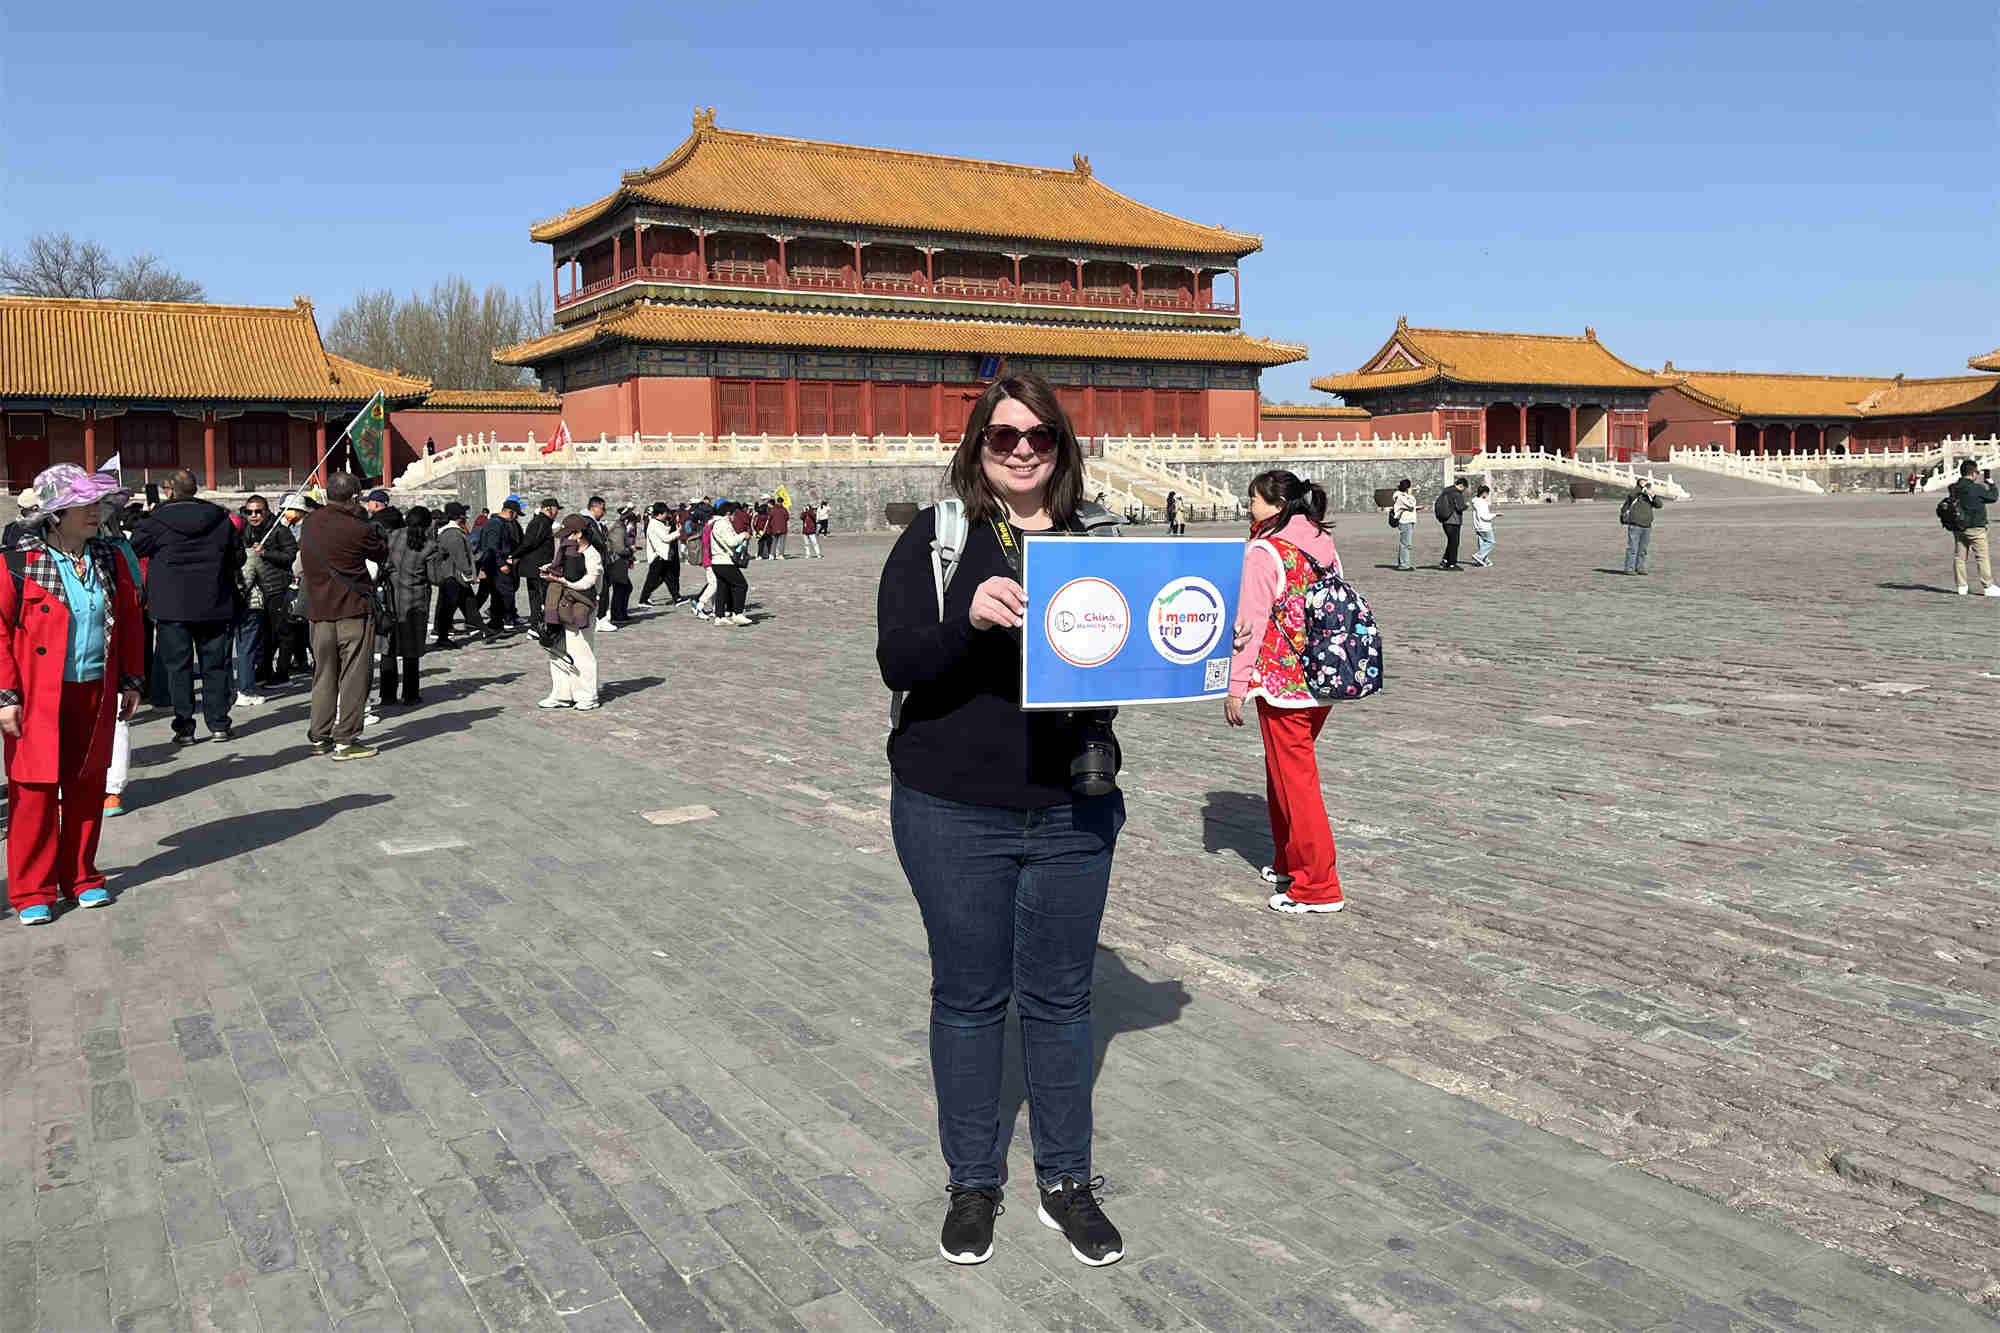 The forbidden city beijing travel guide